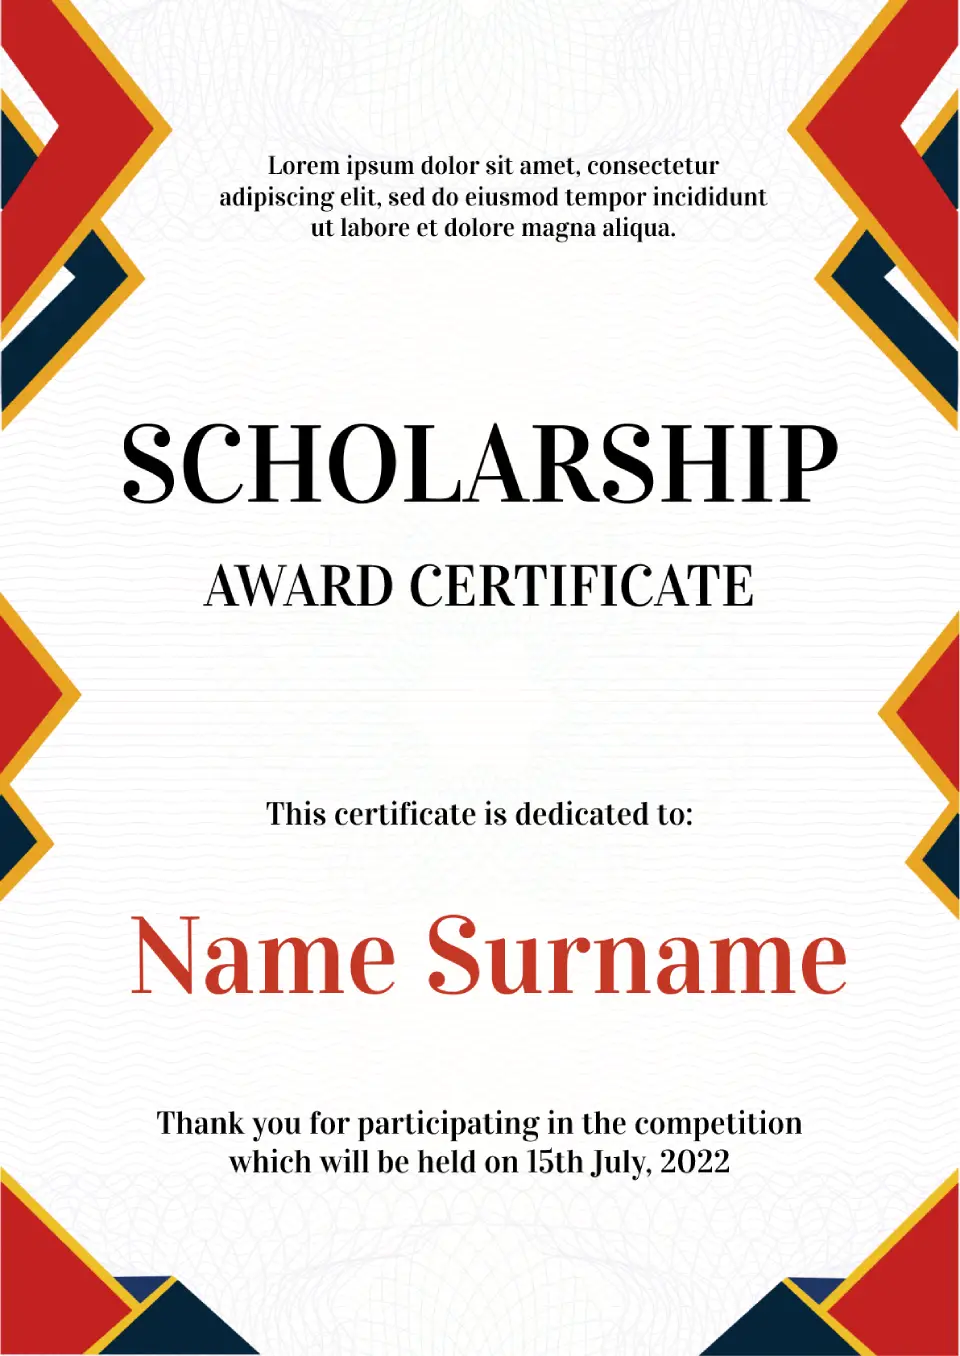 Scholarship Award Certificate for Google Docs